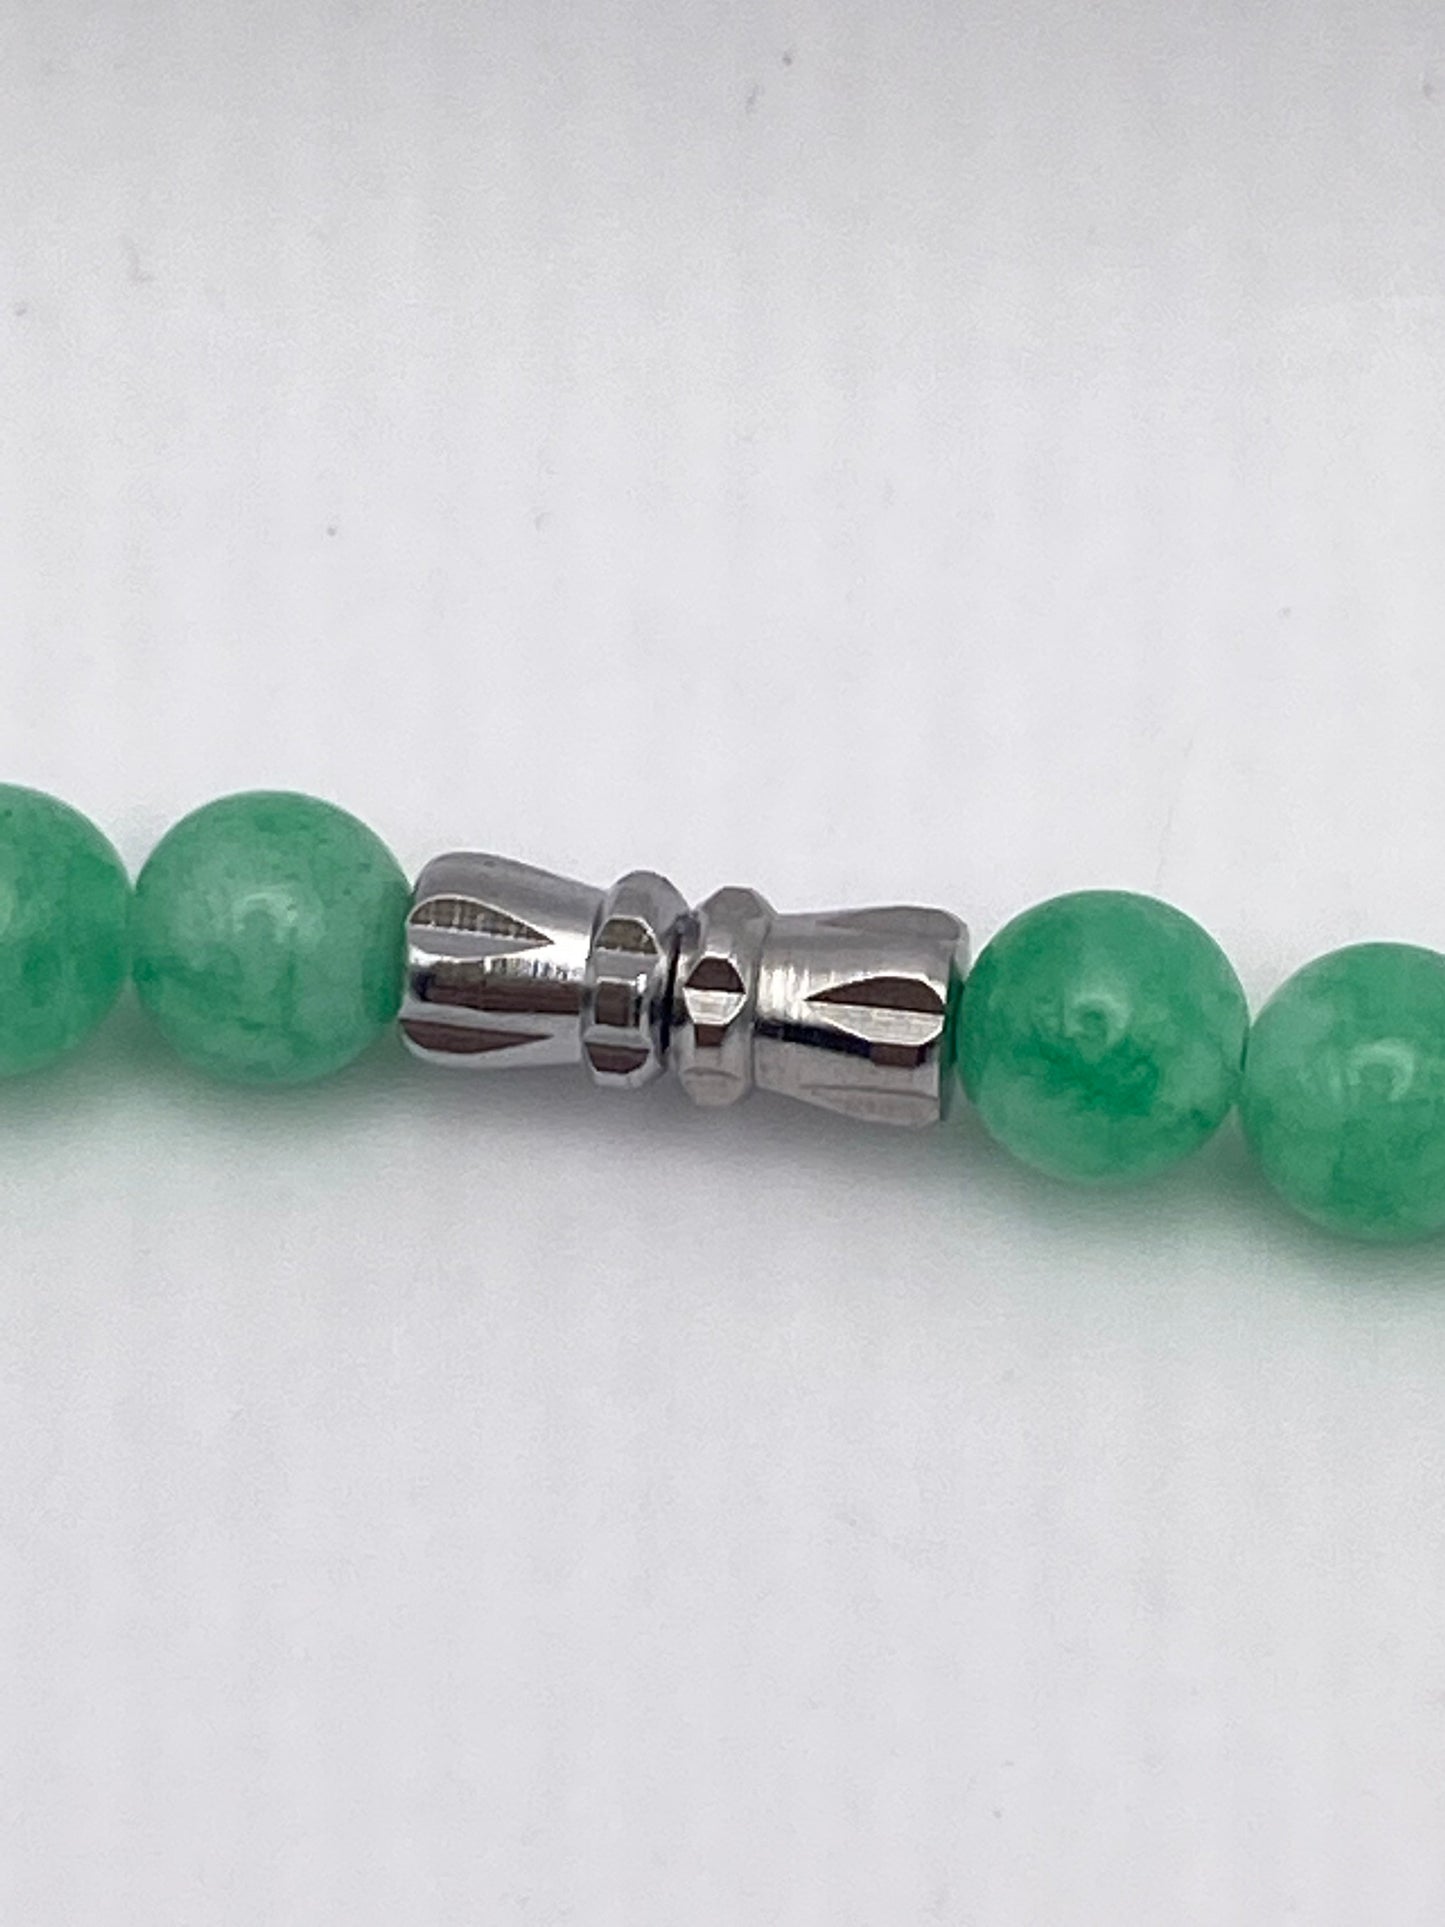 Vintage Jade beaded 16 Inch Necklace